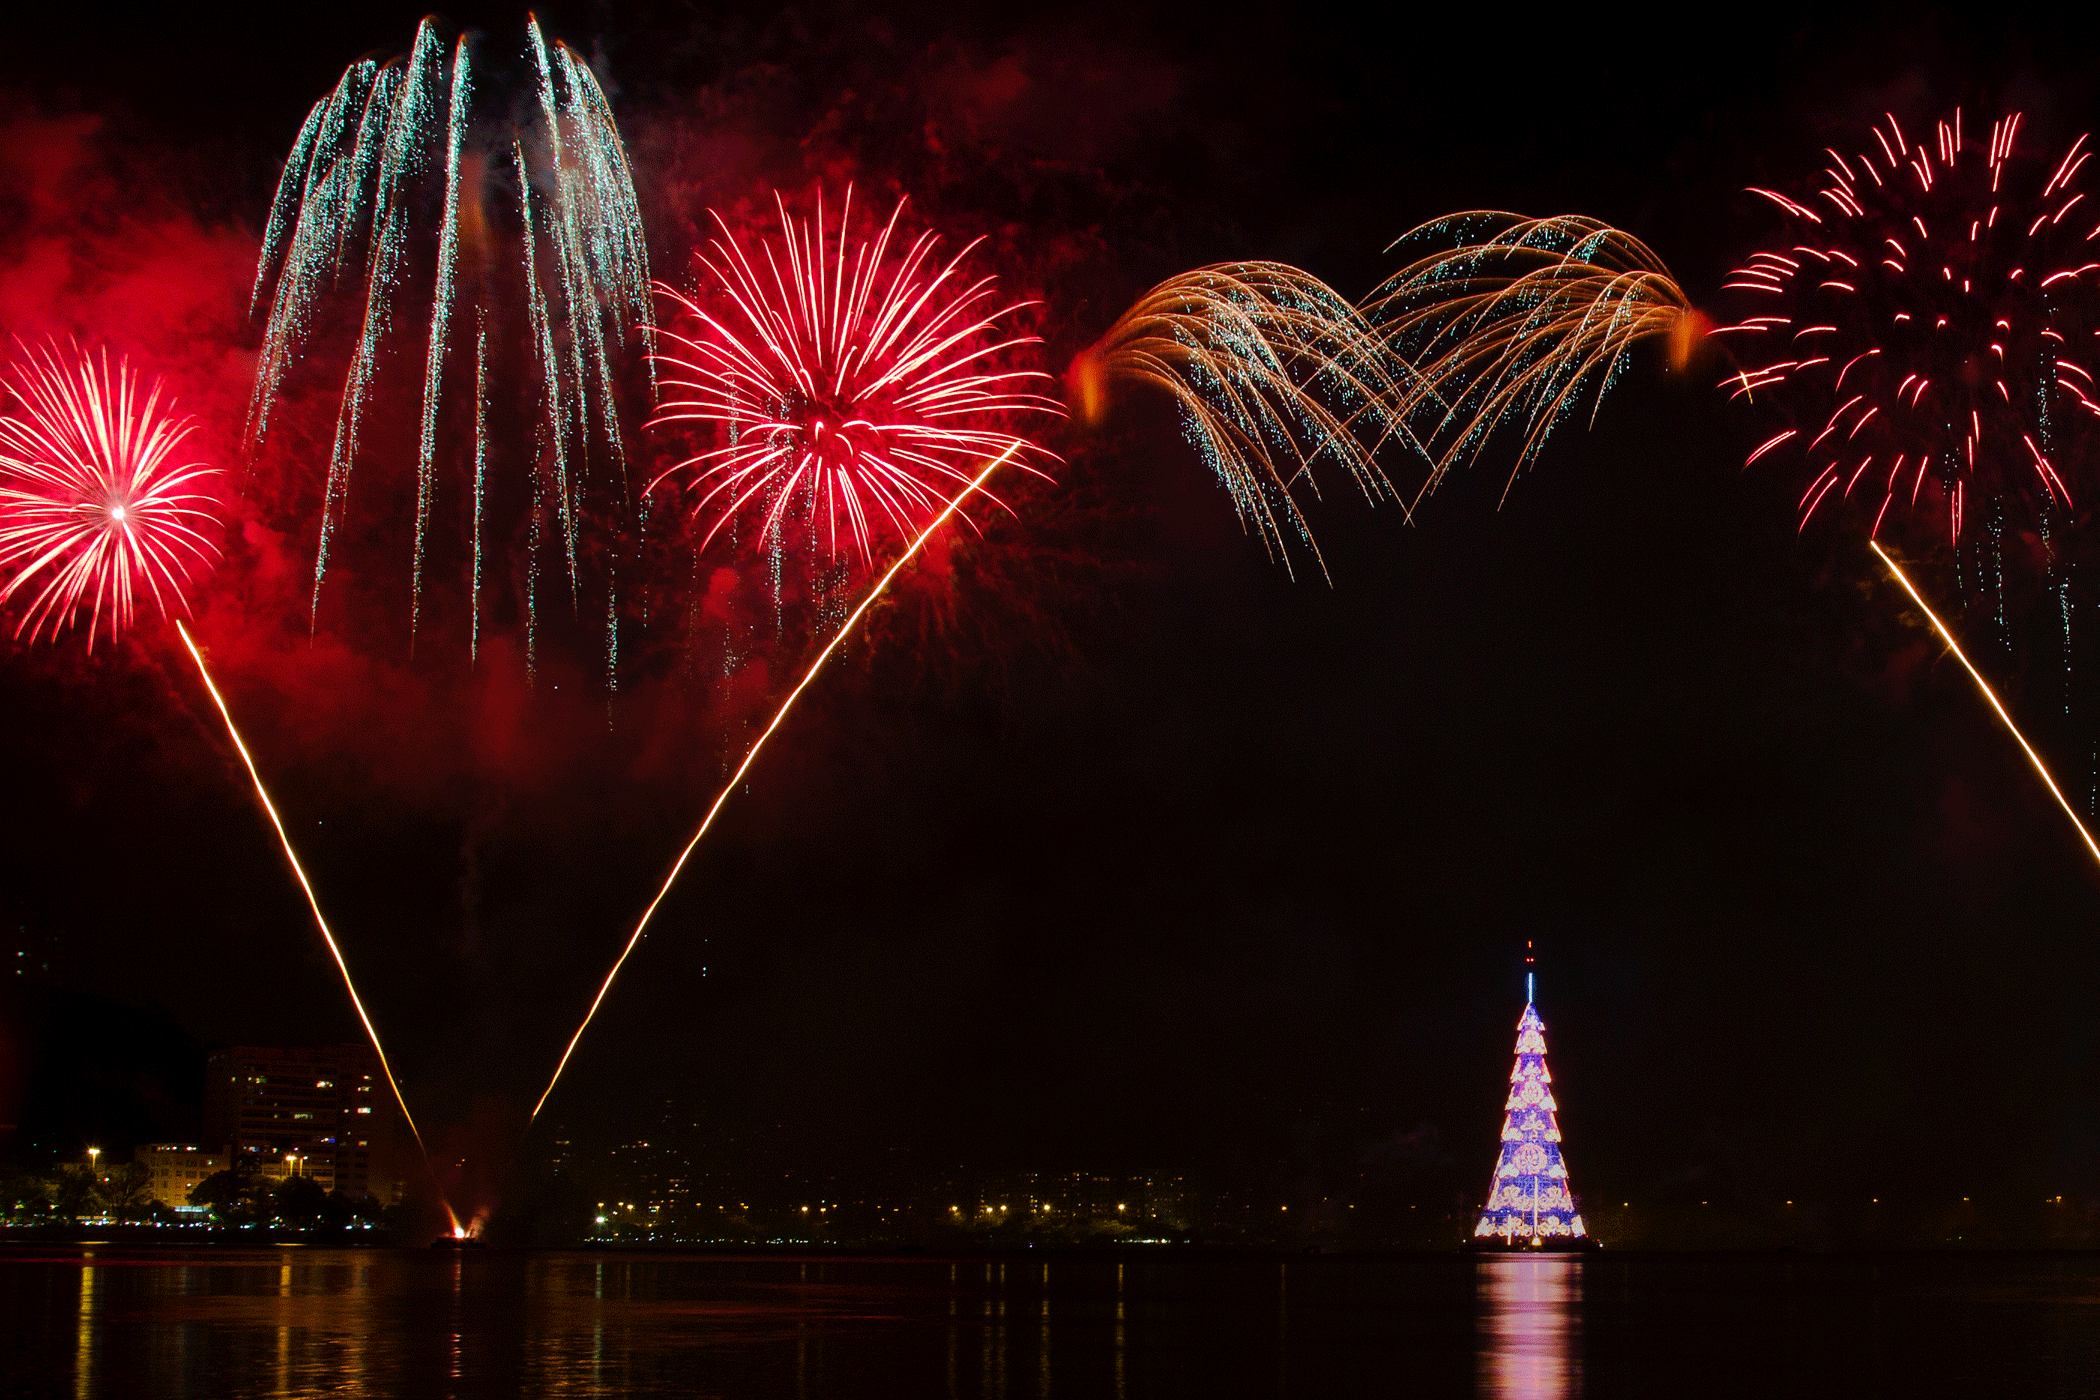 Fireworks explode over the floating Christmas tree at the Rodrigo de Freitas Lagoon in Rio de Janeiro on Dec. 12, 2015.